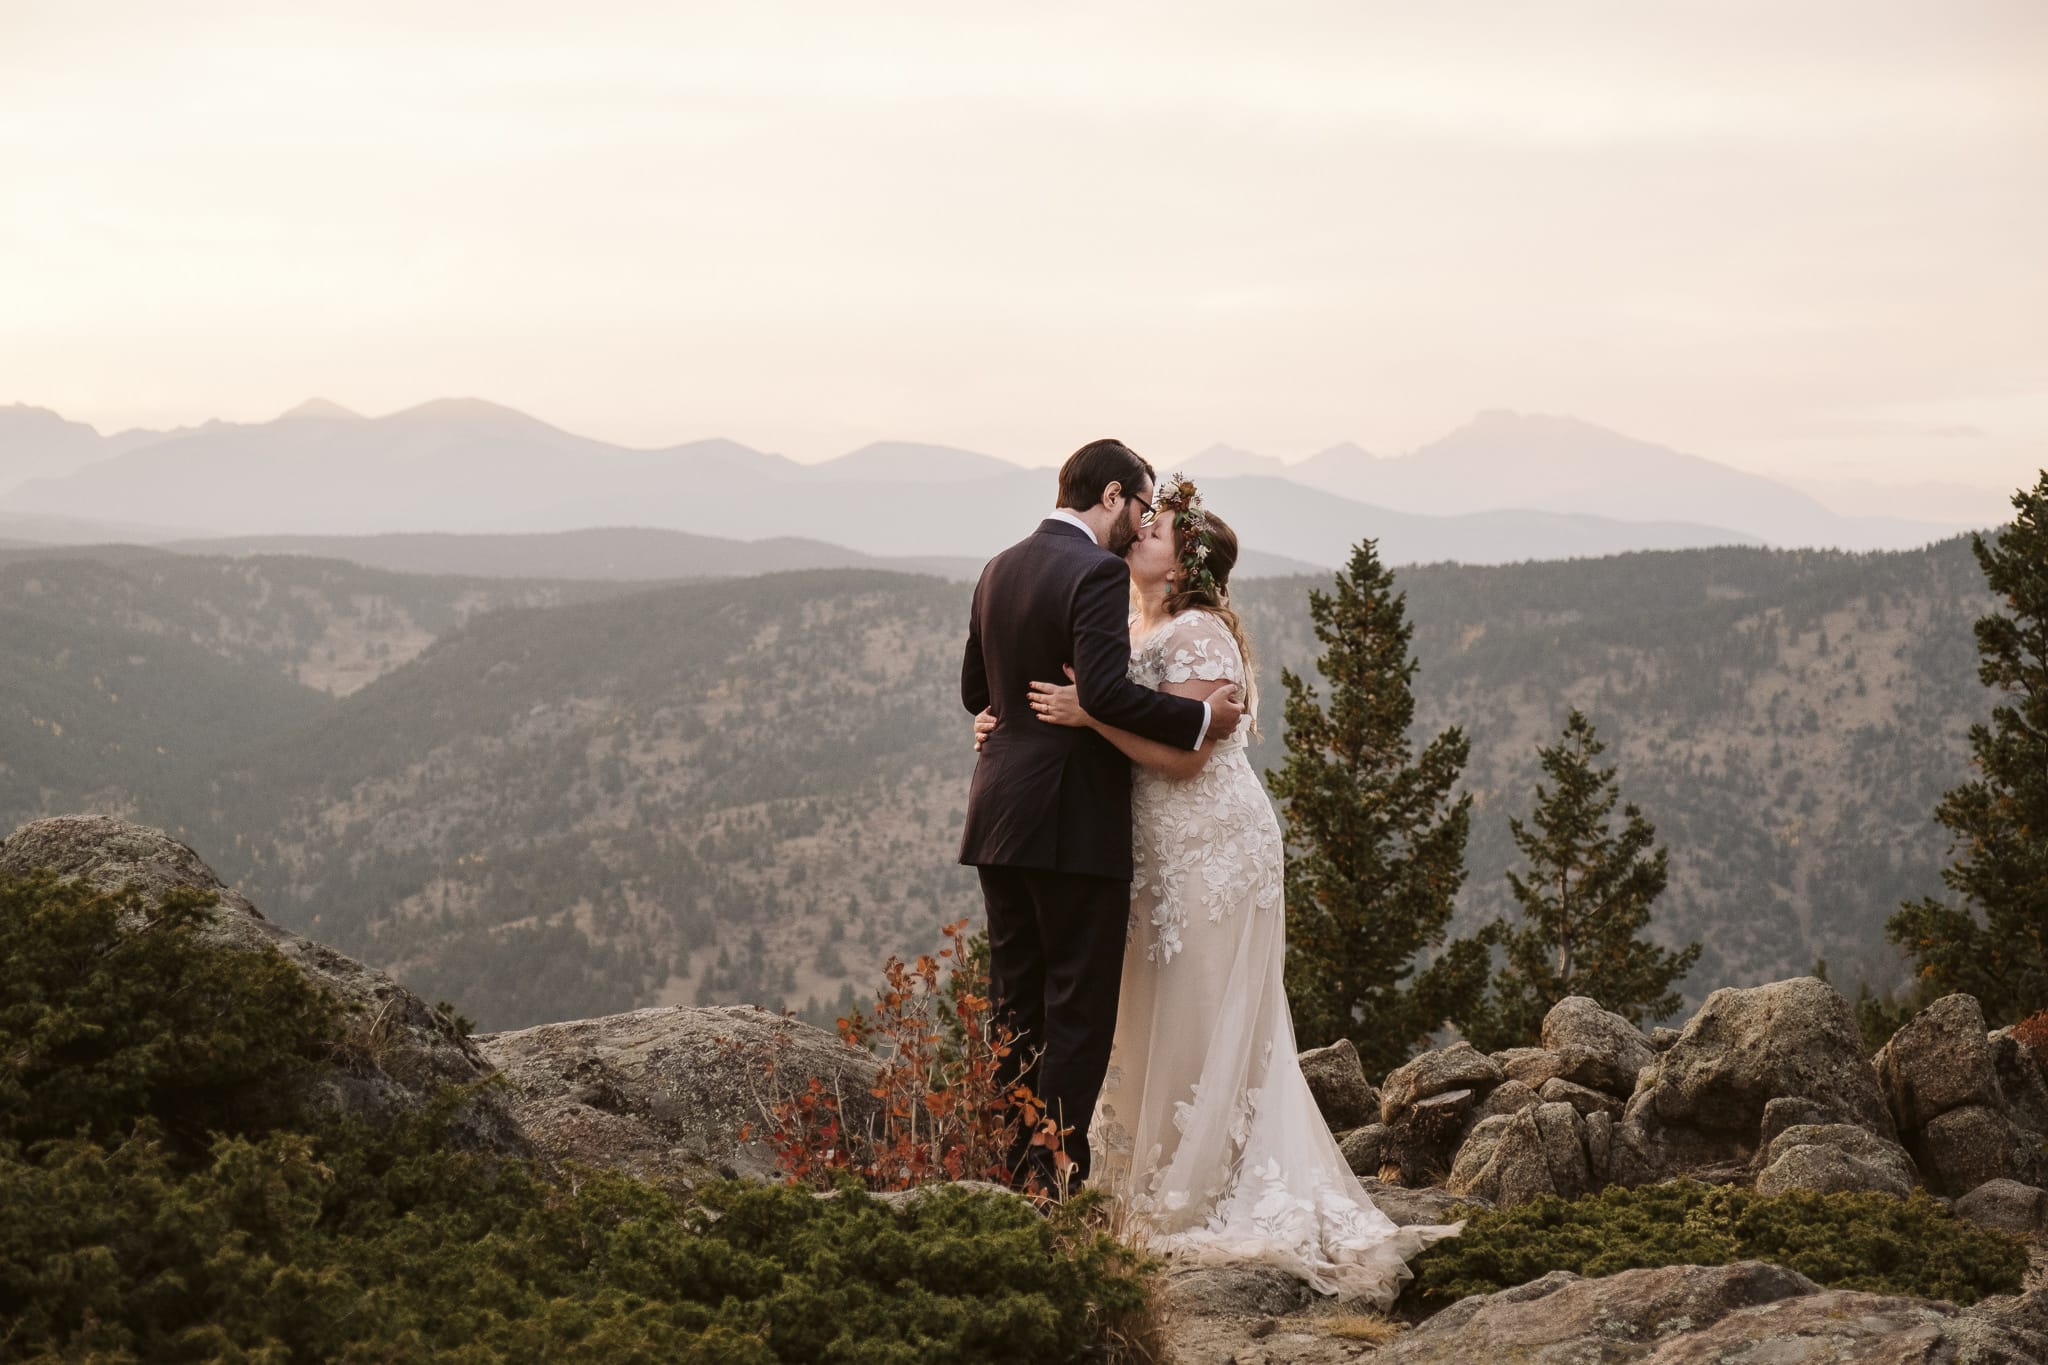 Boulder elopement locations